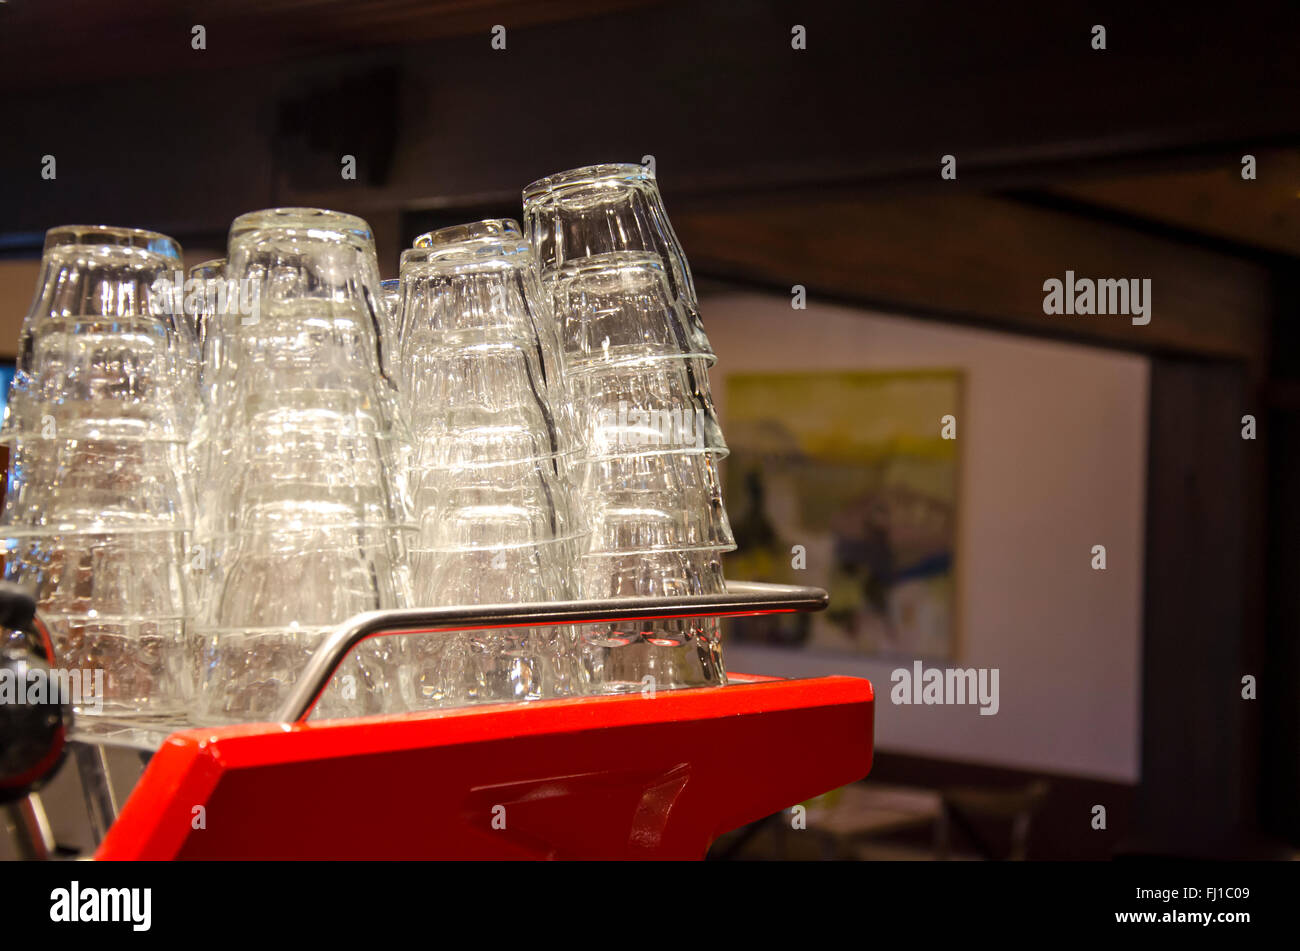 Bicchieri impilati sulla parte superiore di una macchina da caffè Foto Stock